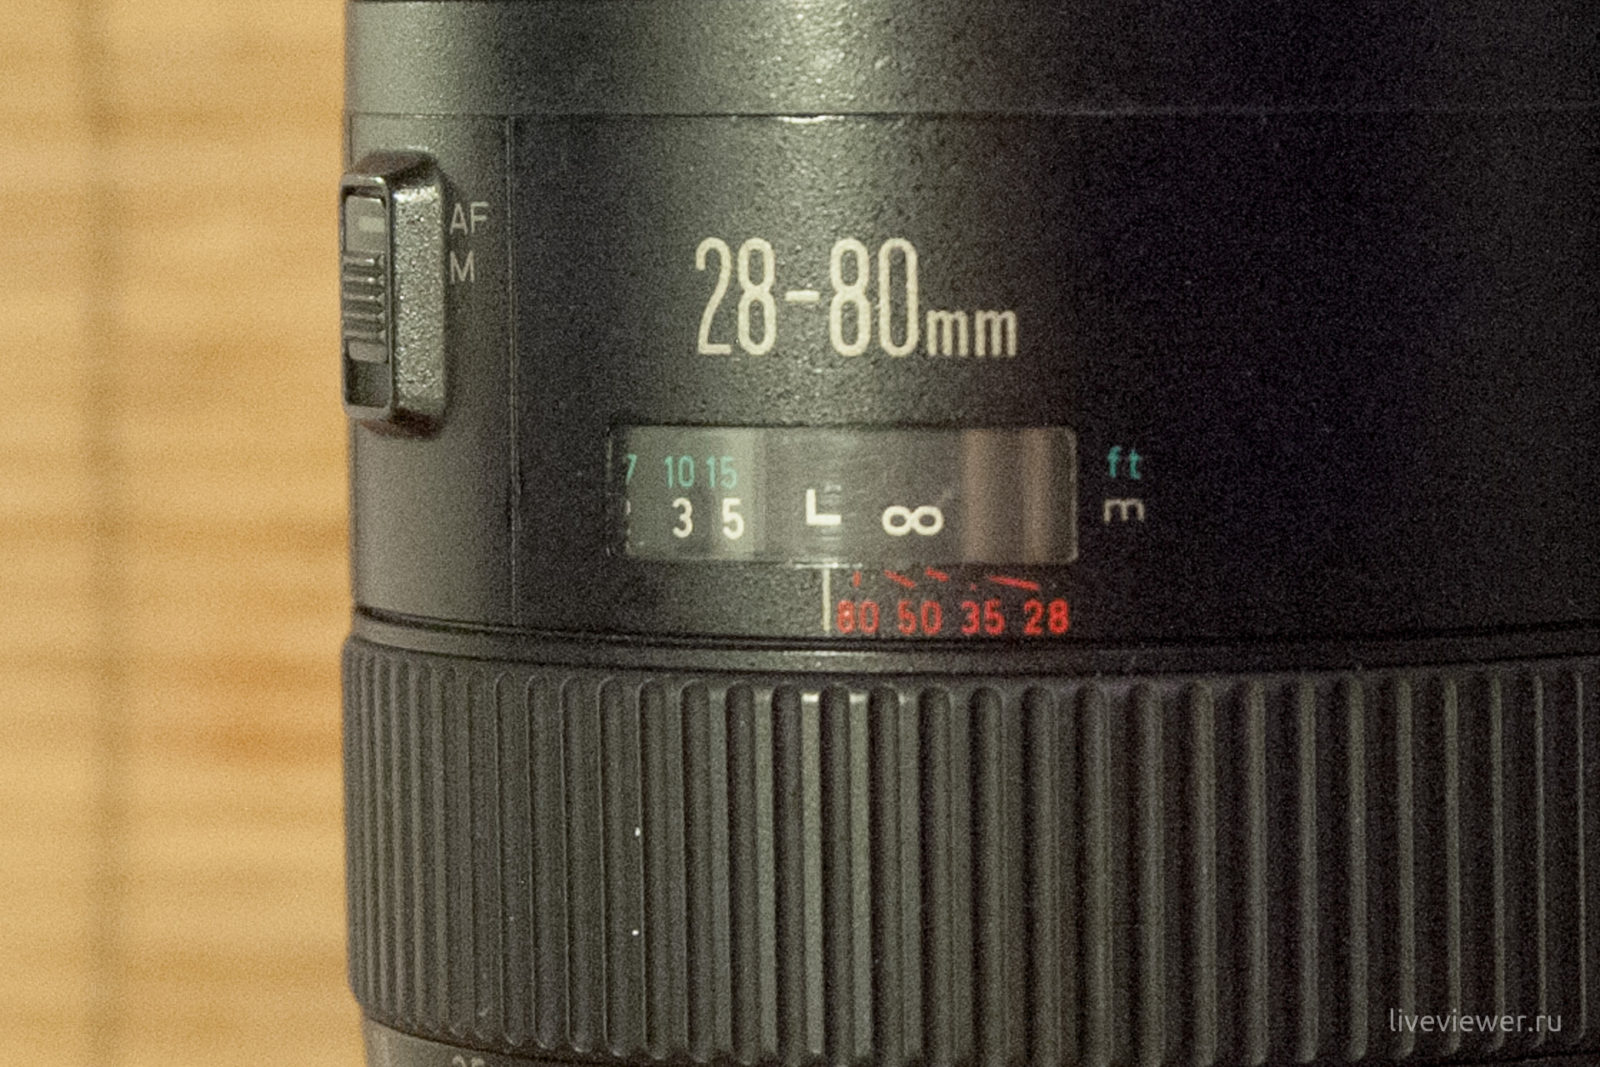 Canon 28-80mm. Окно дистанции фокусировки